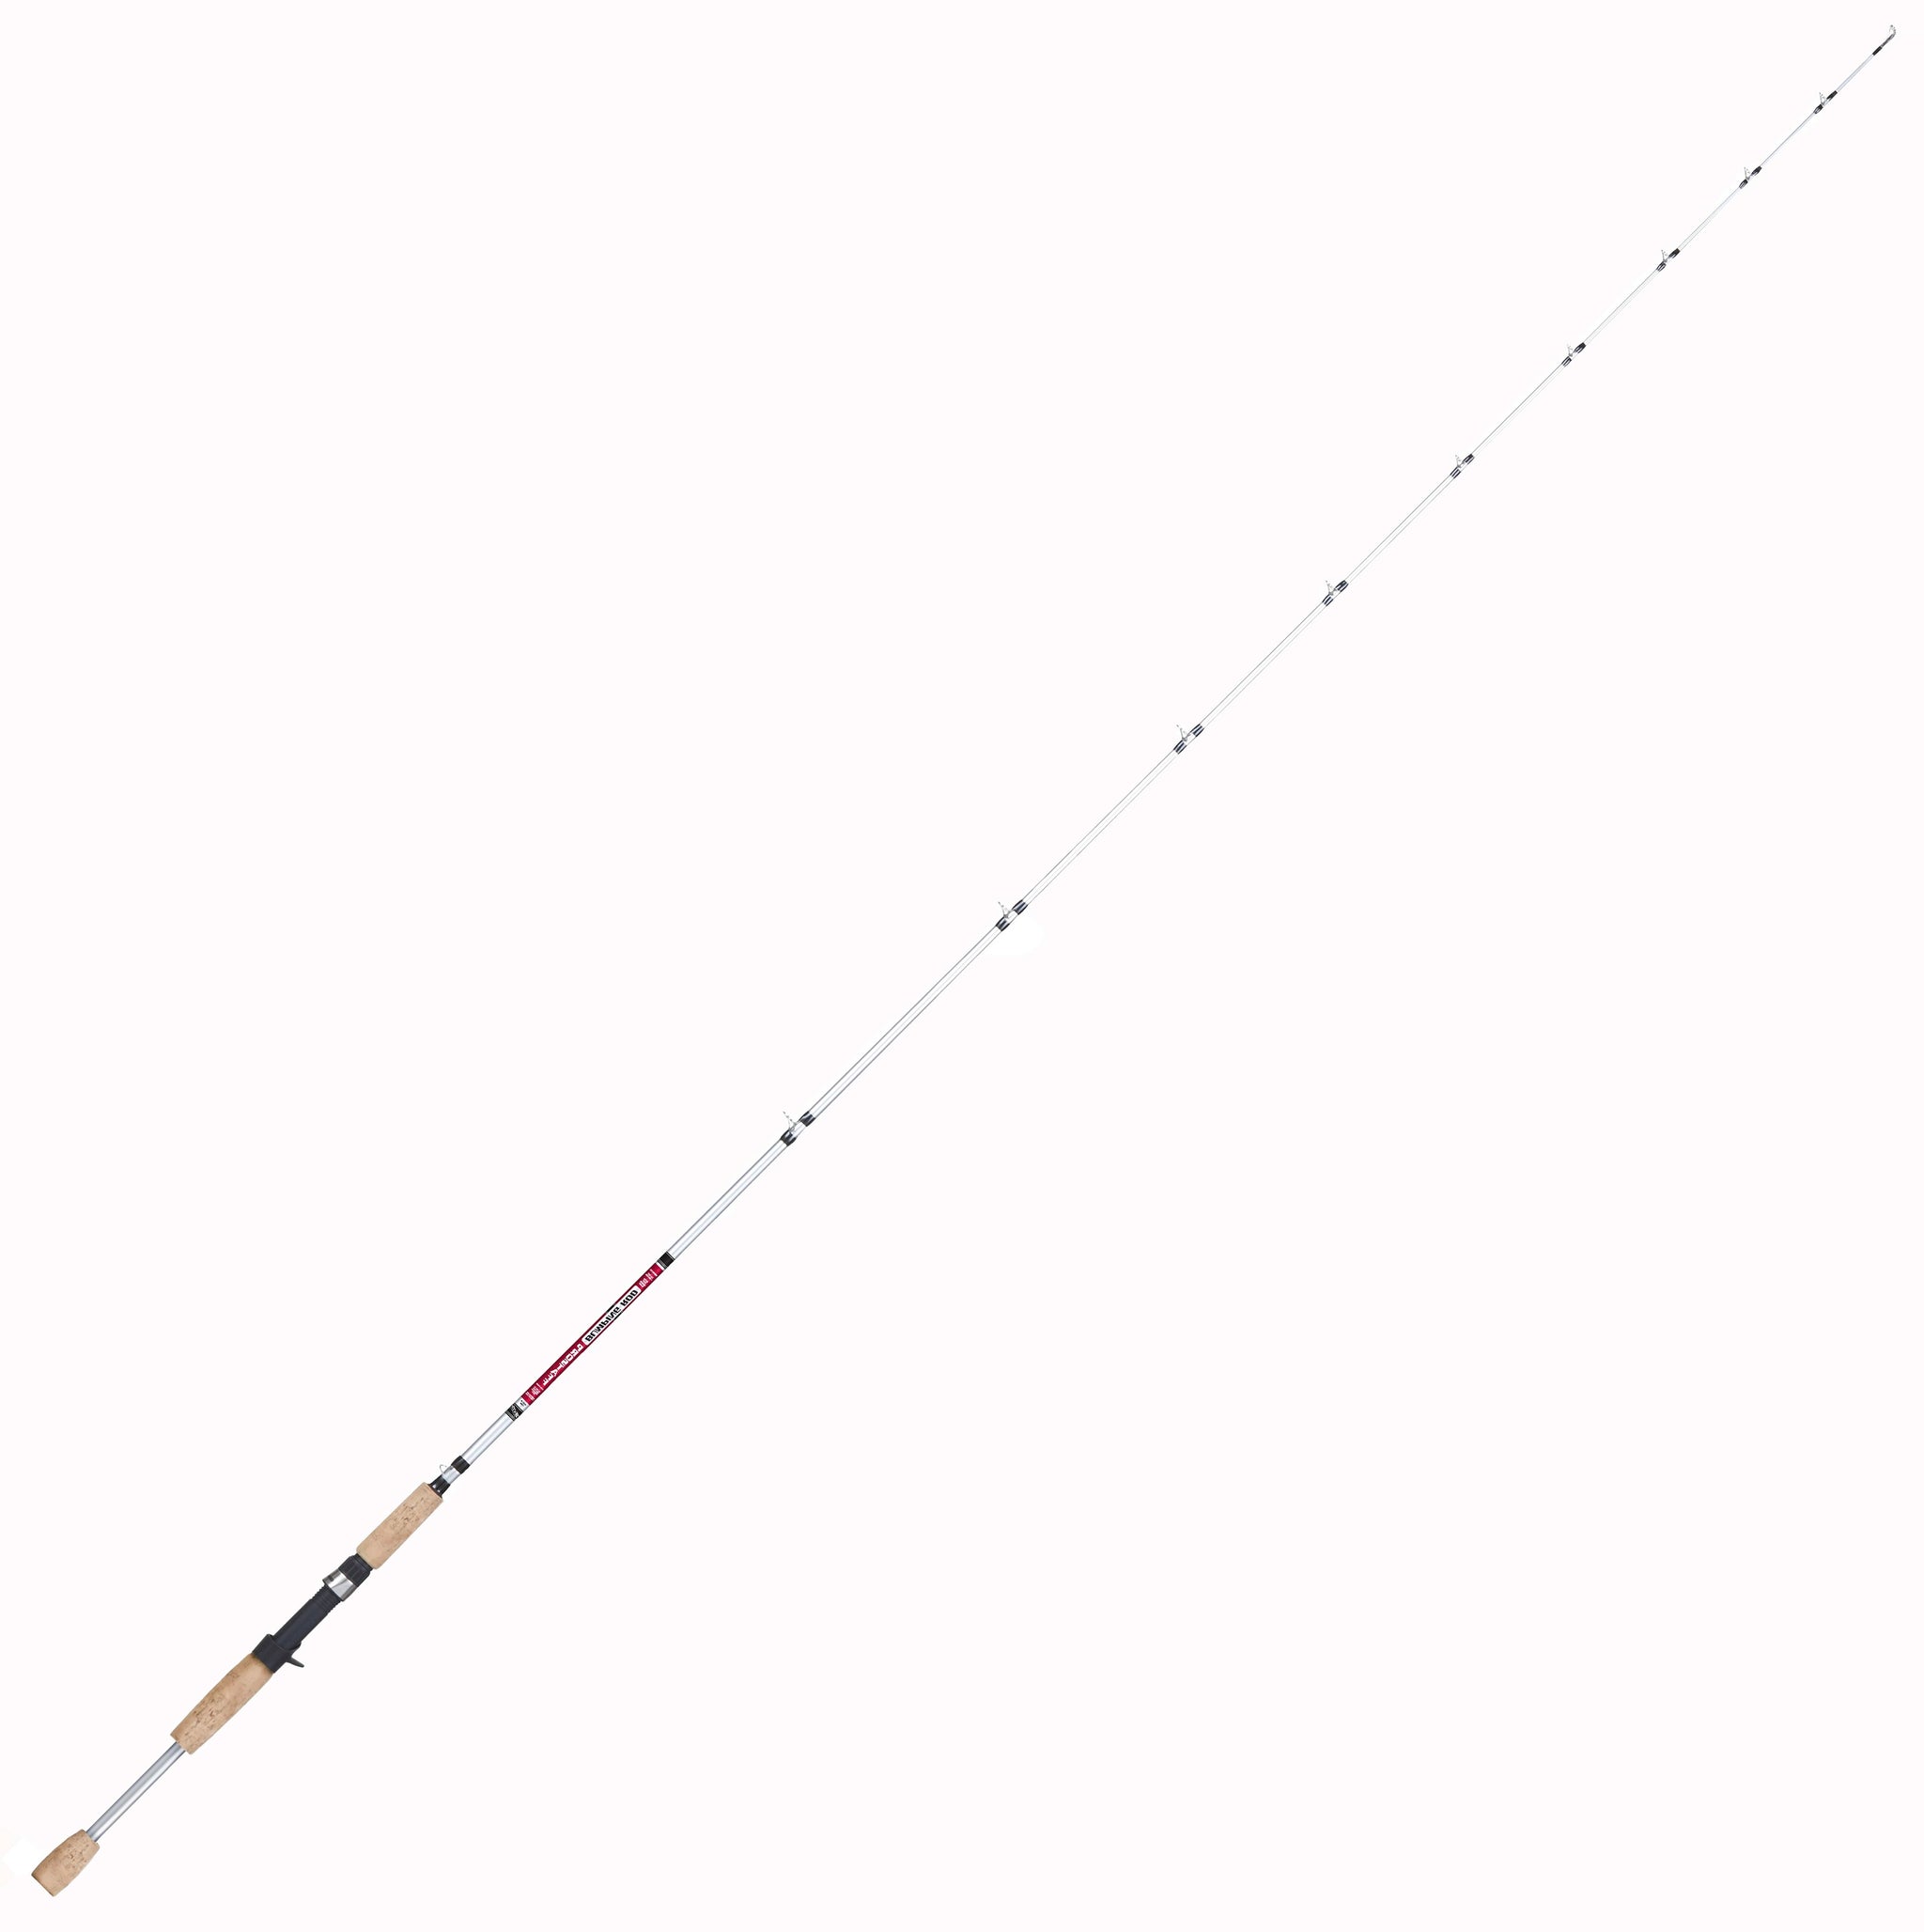 Silver Cat Catfish Pole - Redesign - B'n'M Pole Company